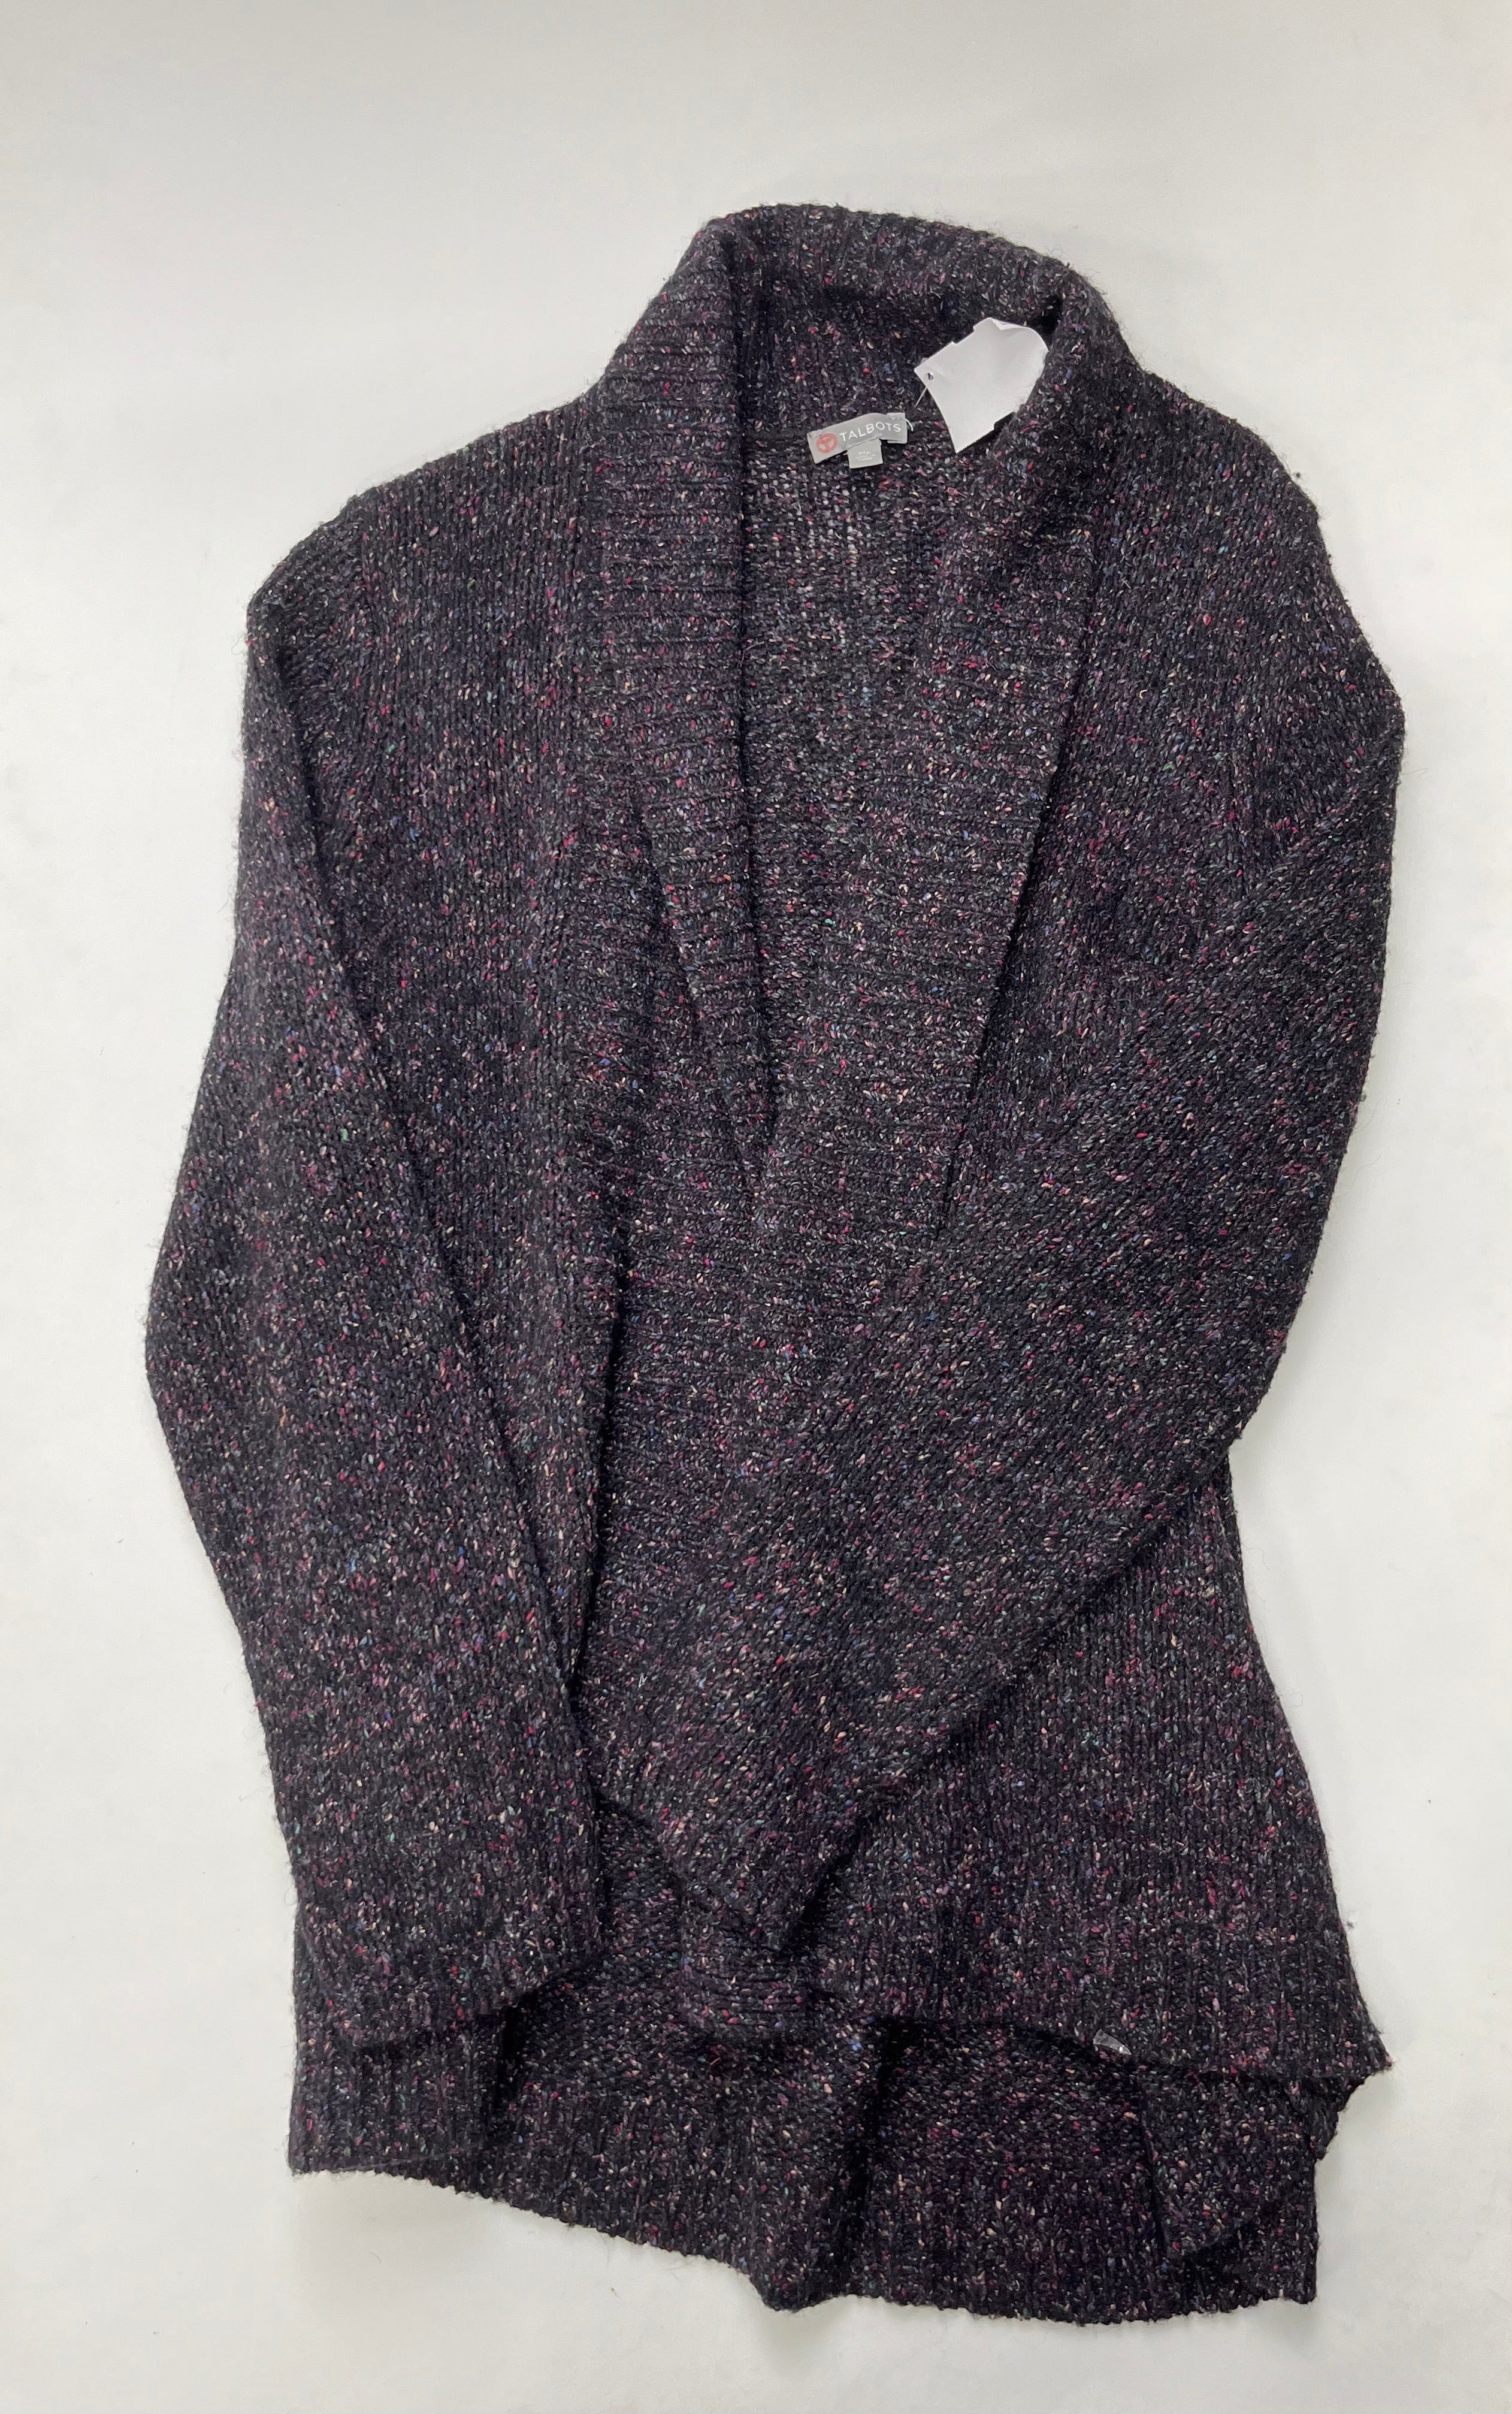 Sweater Cardigan By Talbots Size: Petite Medium